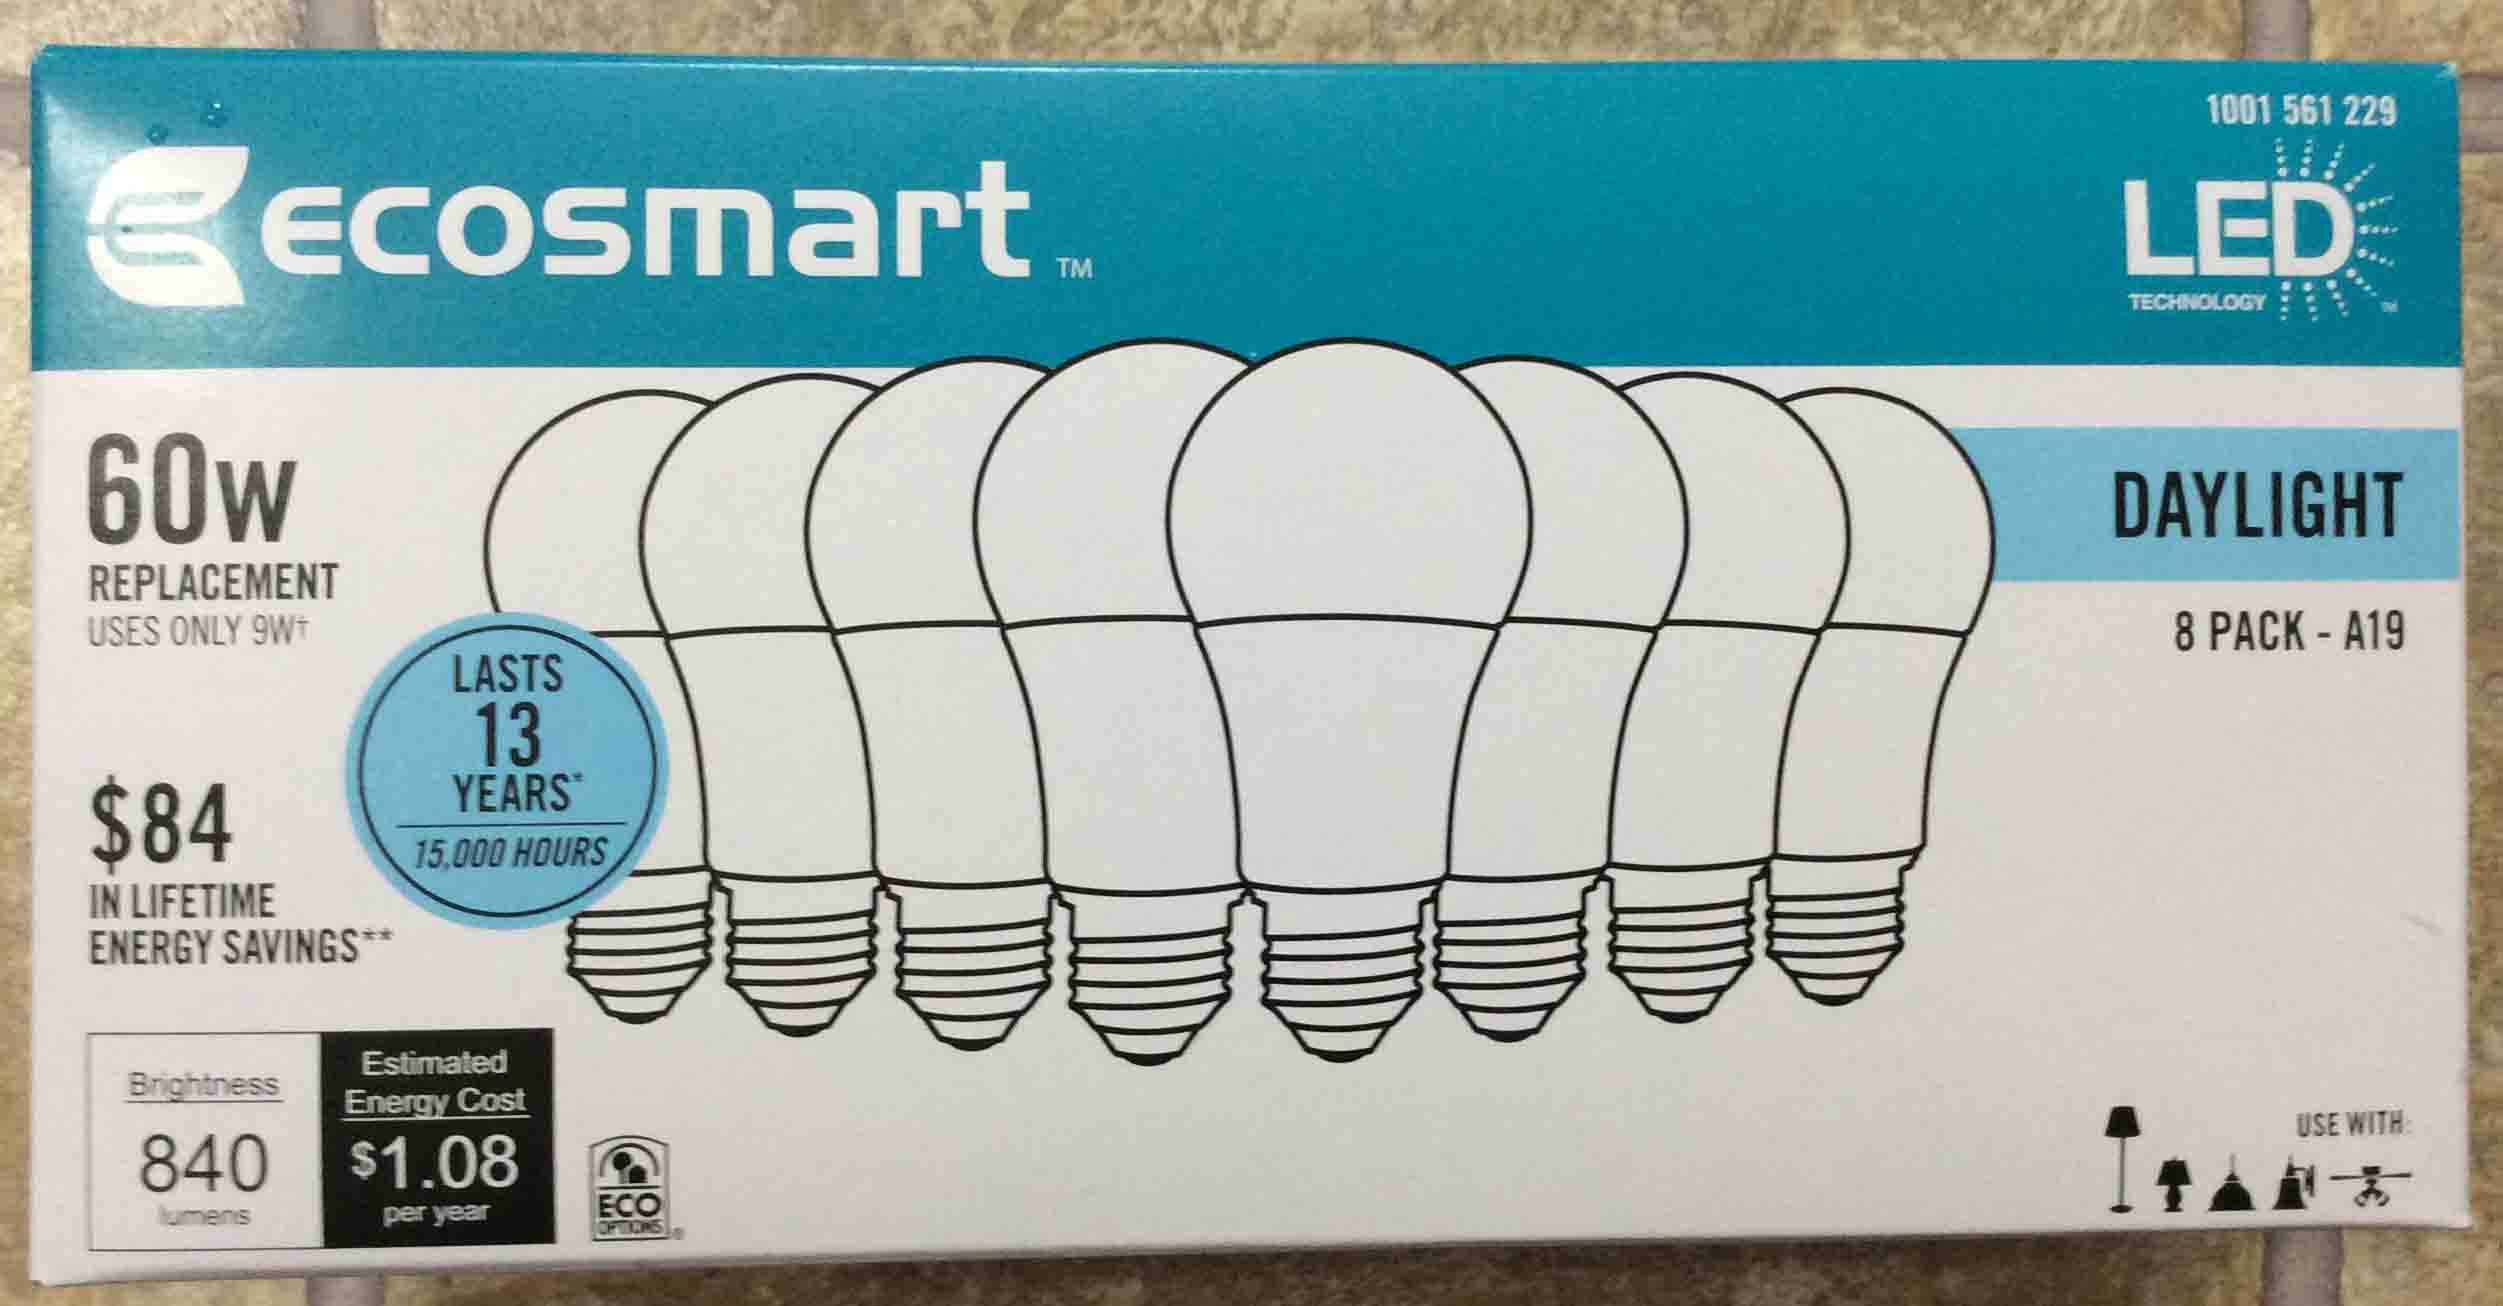 8-Pack  *FREE SHIPPING* NEW EcoSmart 1001 561 229 60W LED Light Bulbs 